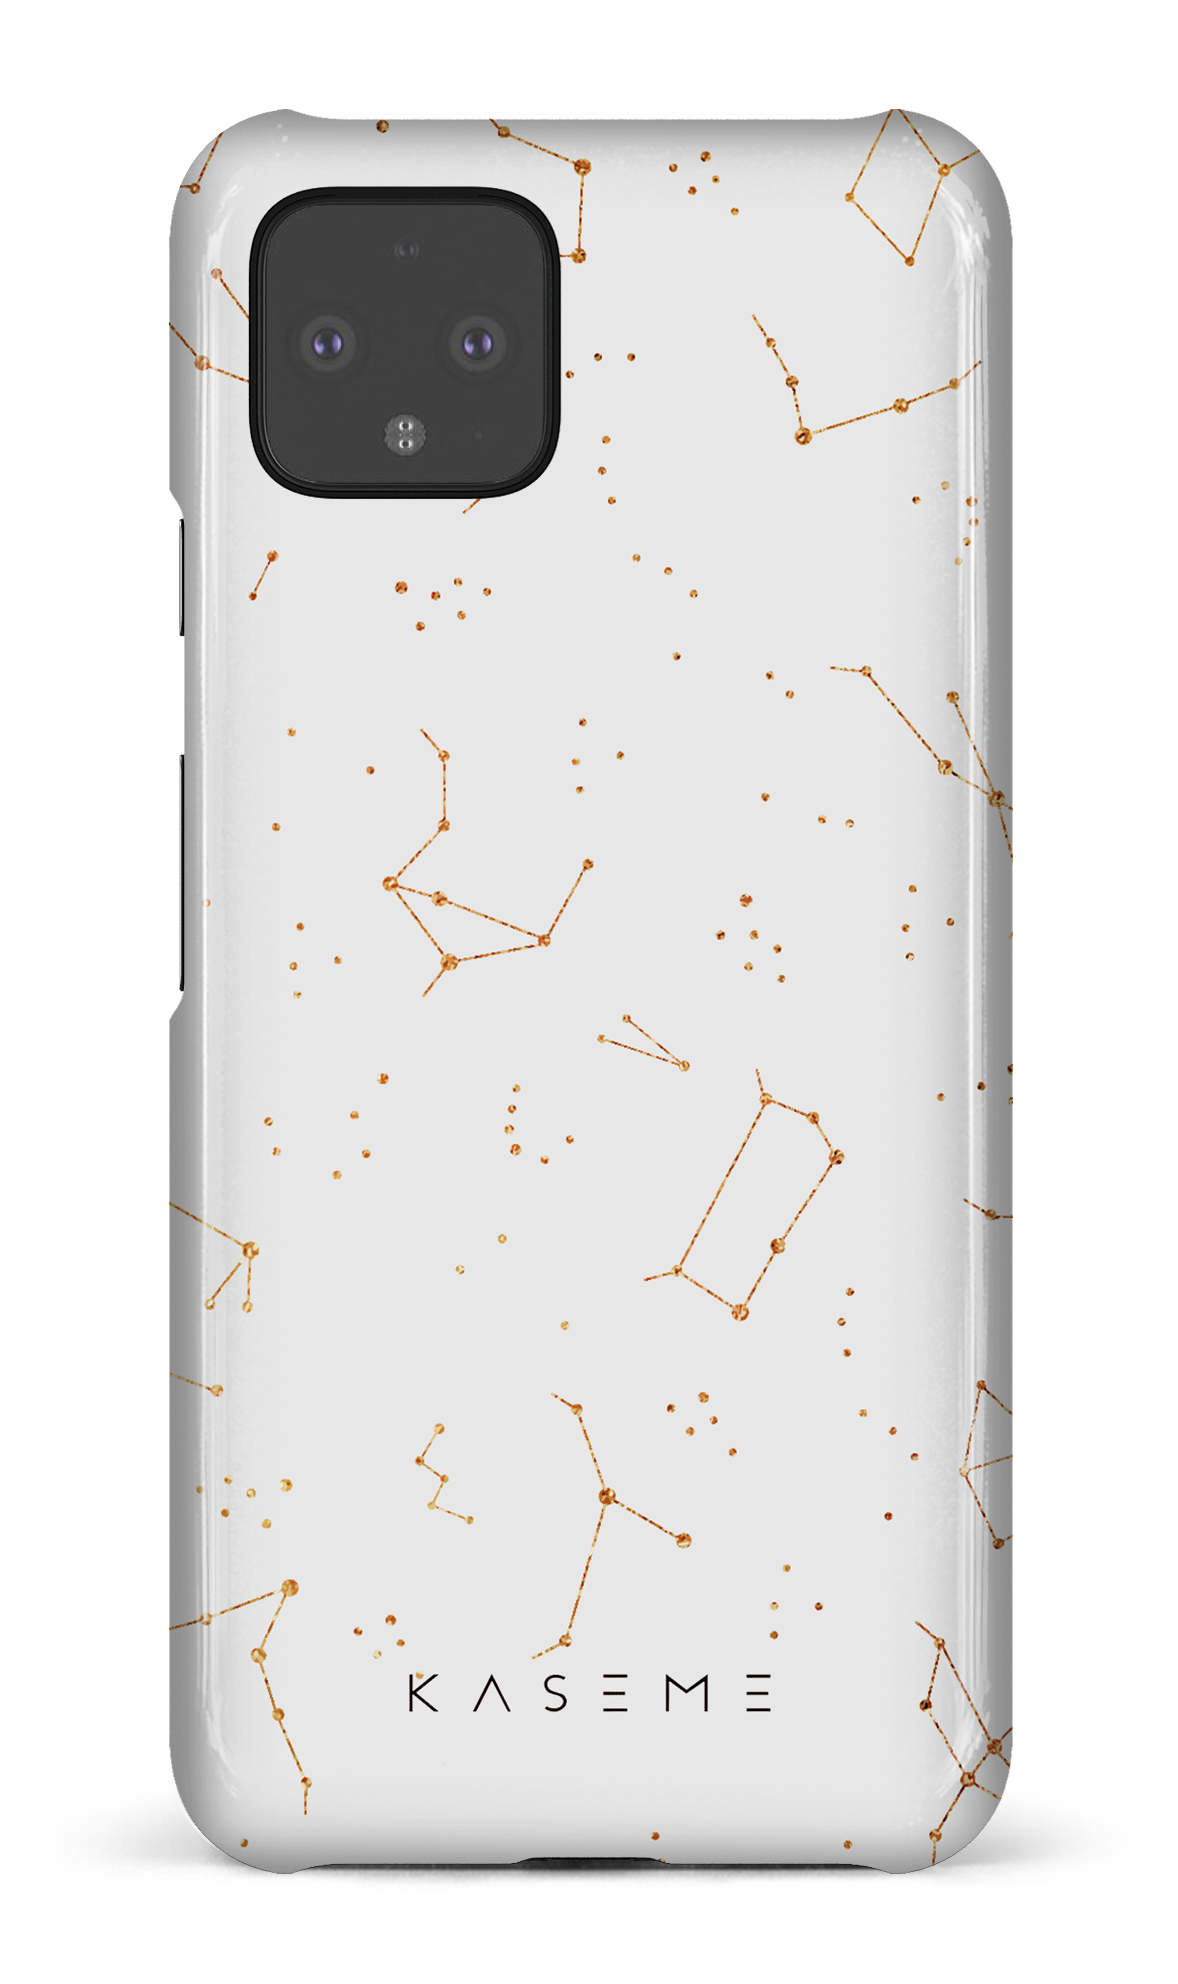 Stardust Sky by Cindy - Google Pixel 4